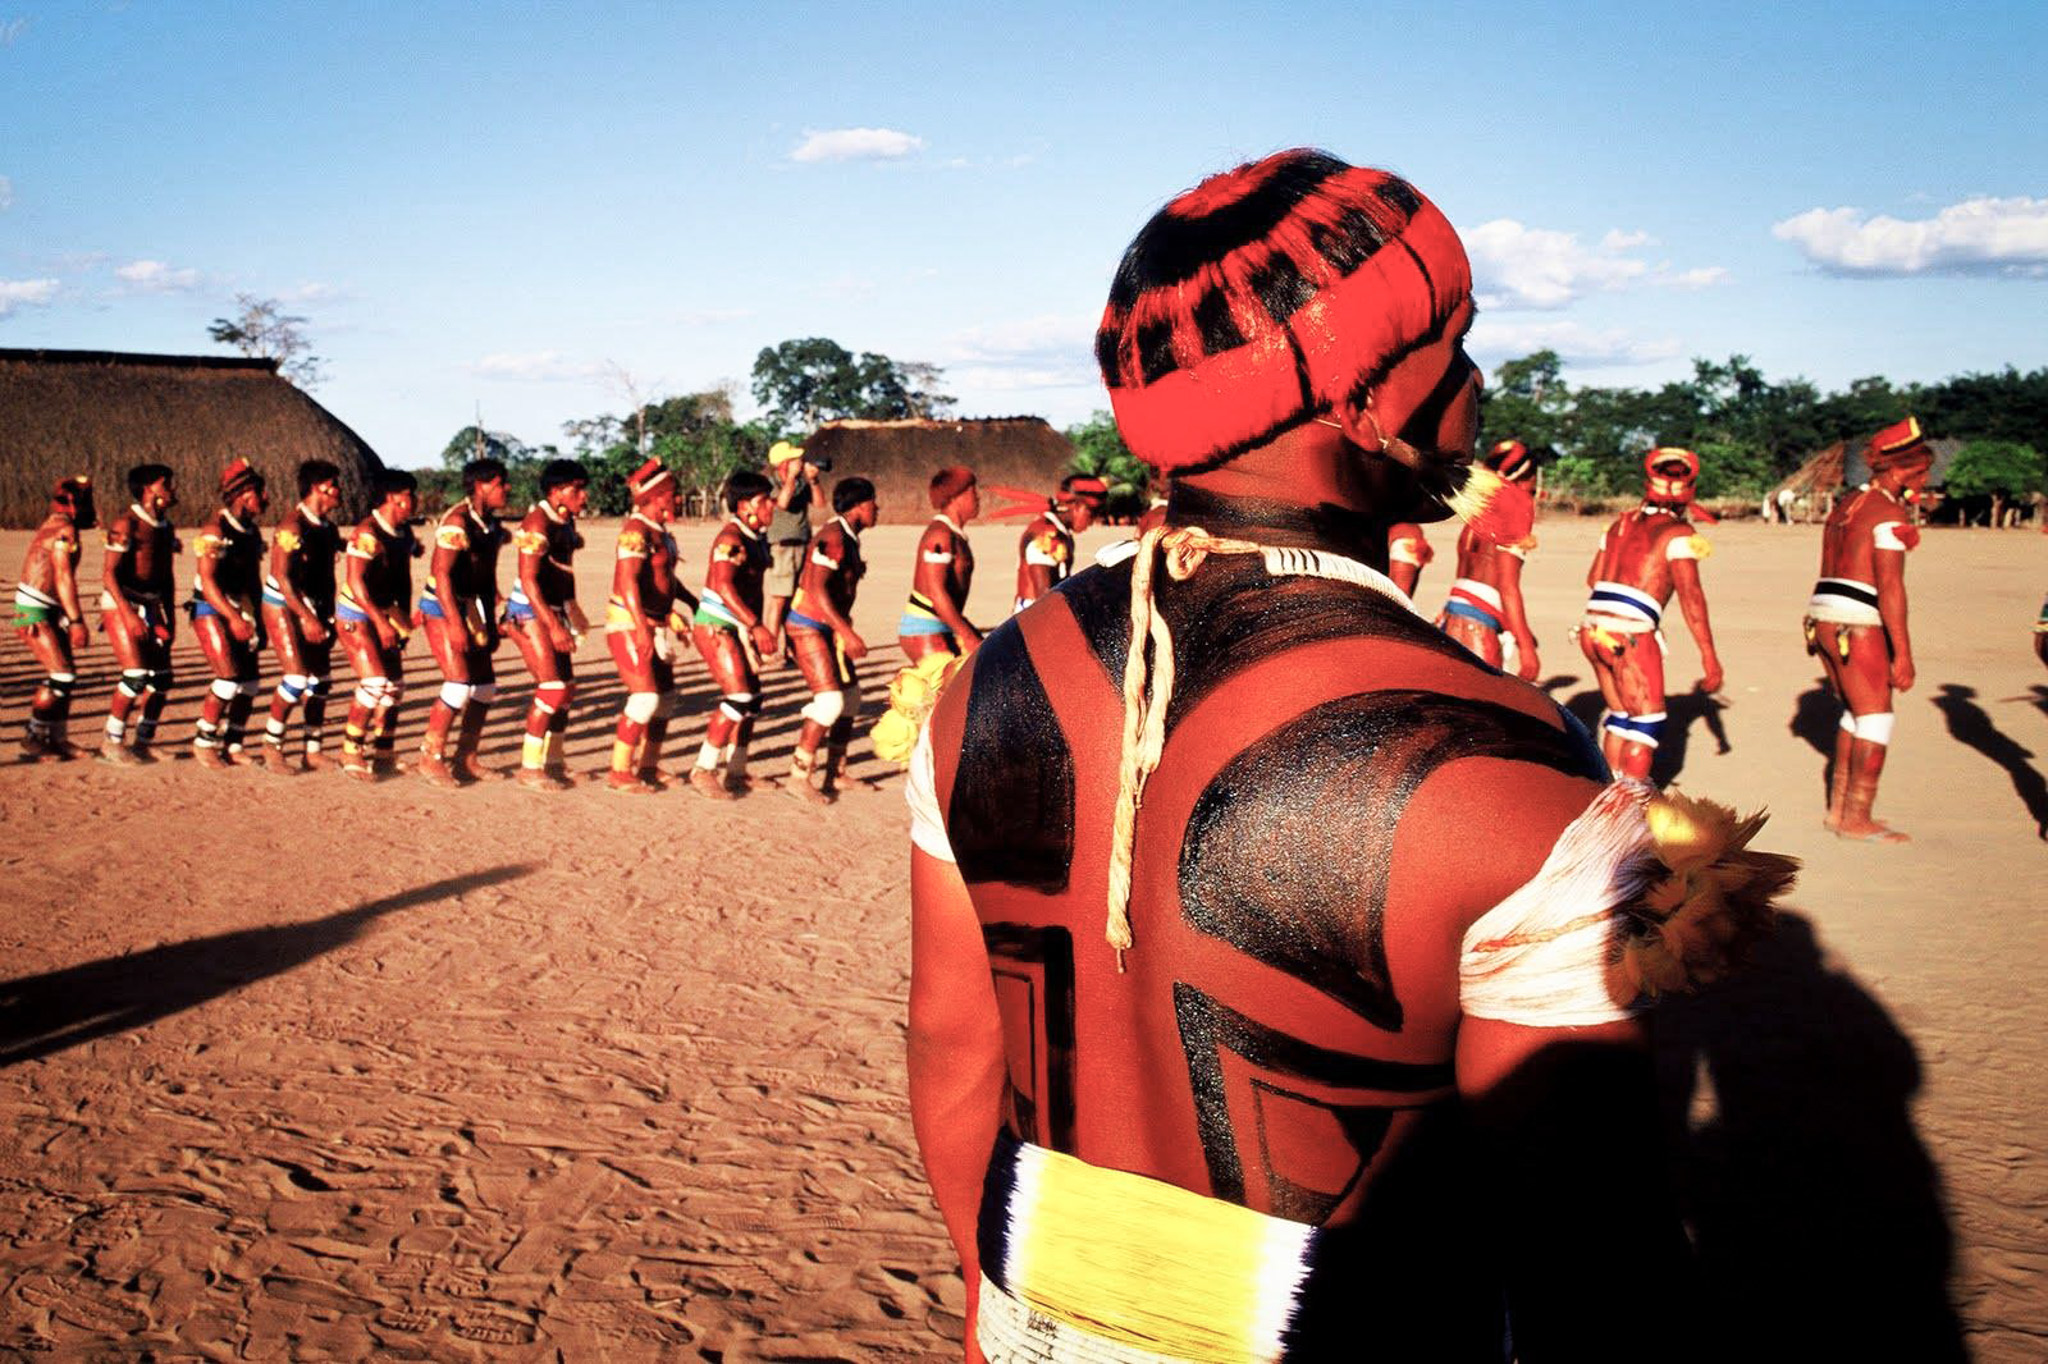 Mission: Voltalia invited to a Kuarup Ceremony in the Amazon